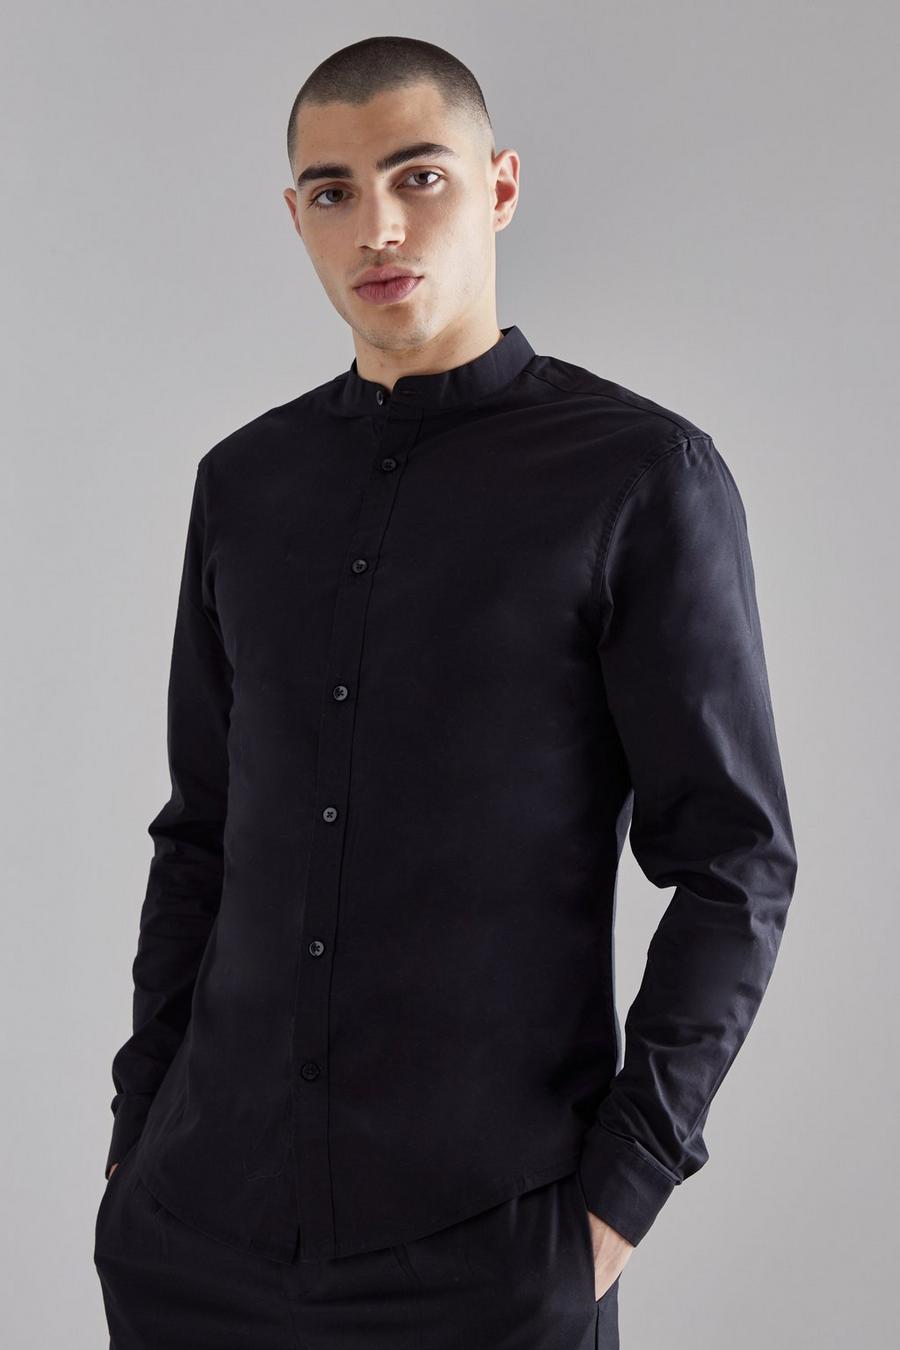 Black Long Sleeve Grandad Collar Shirt